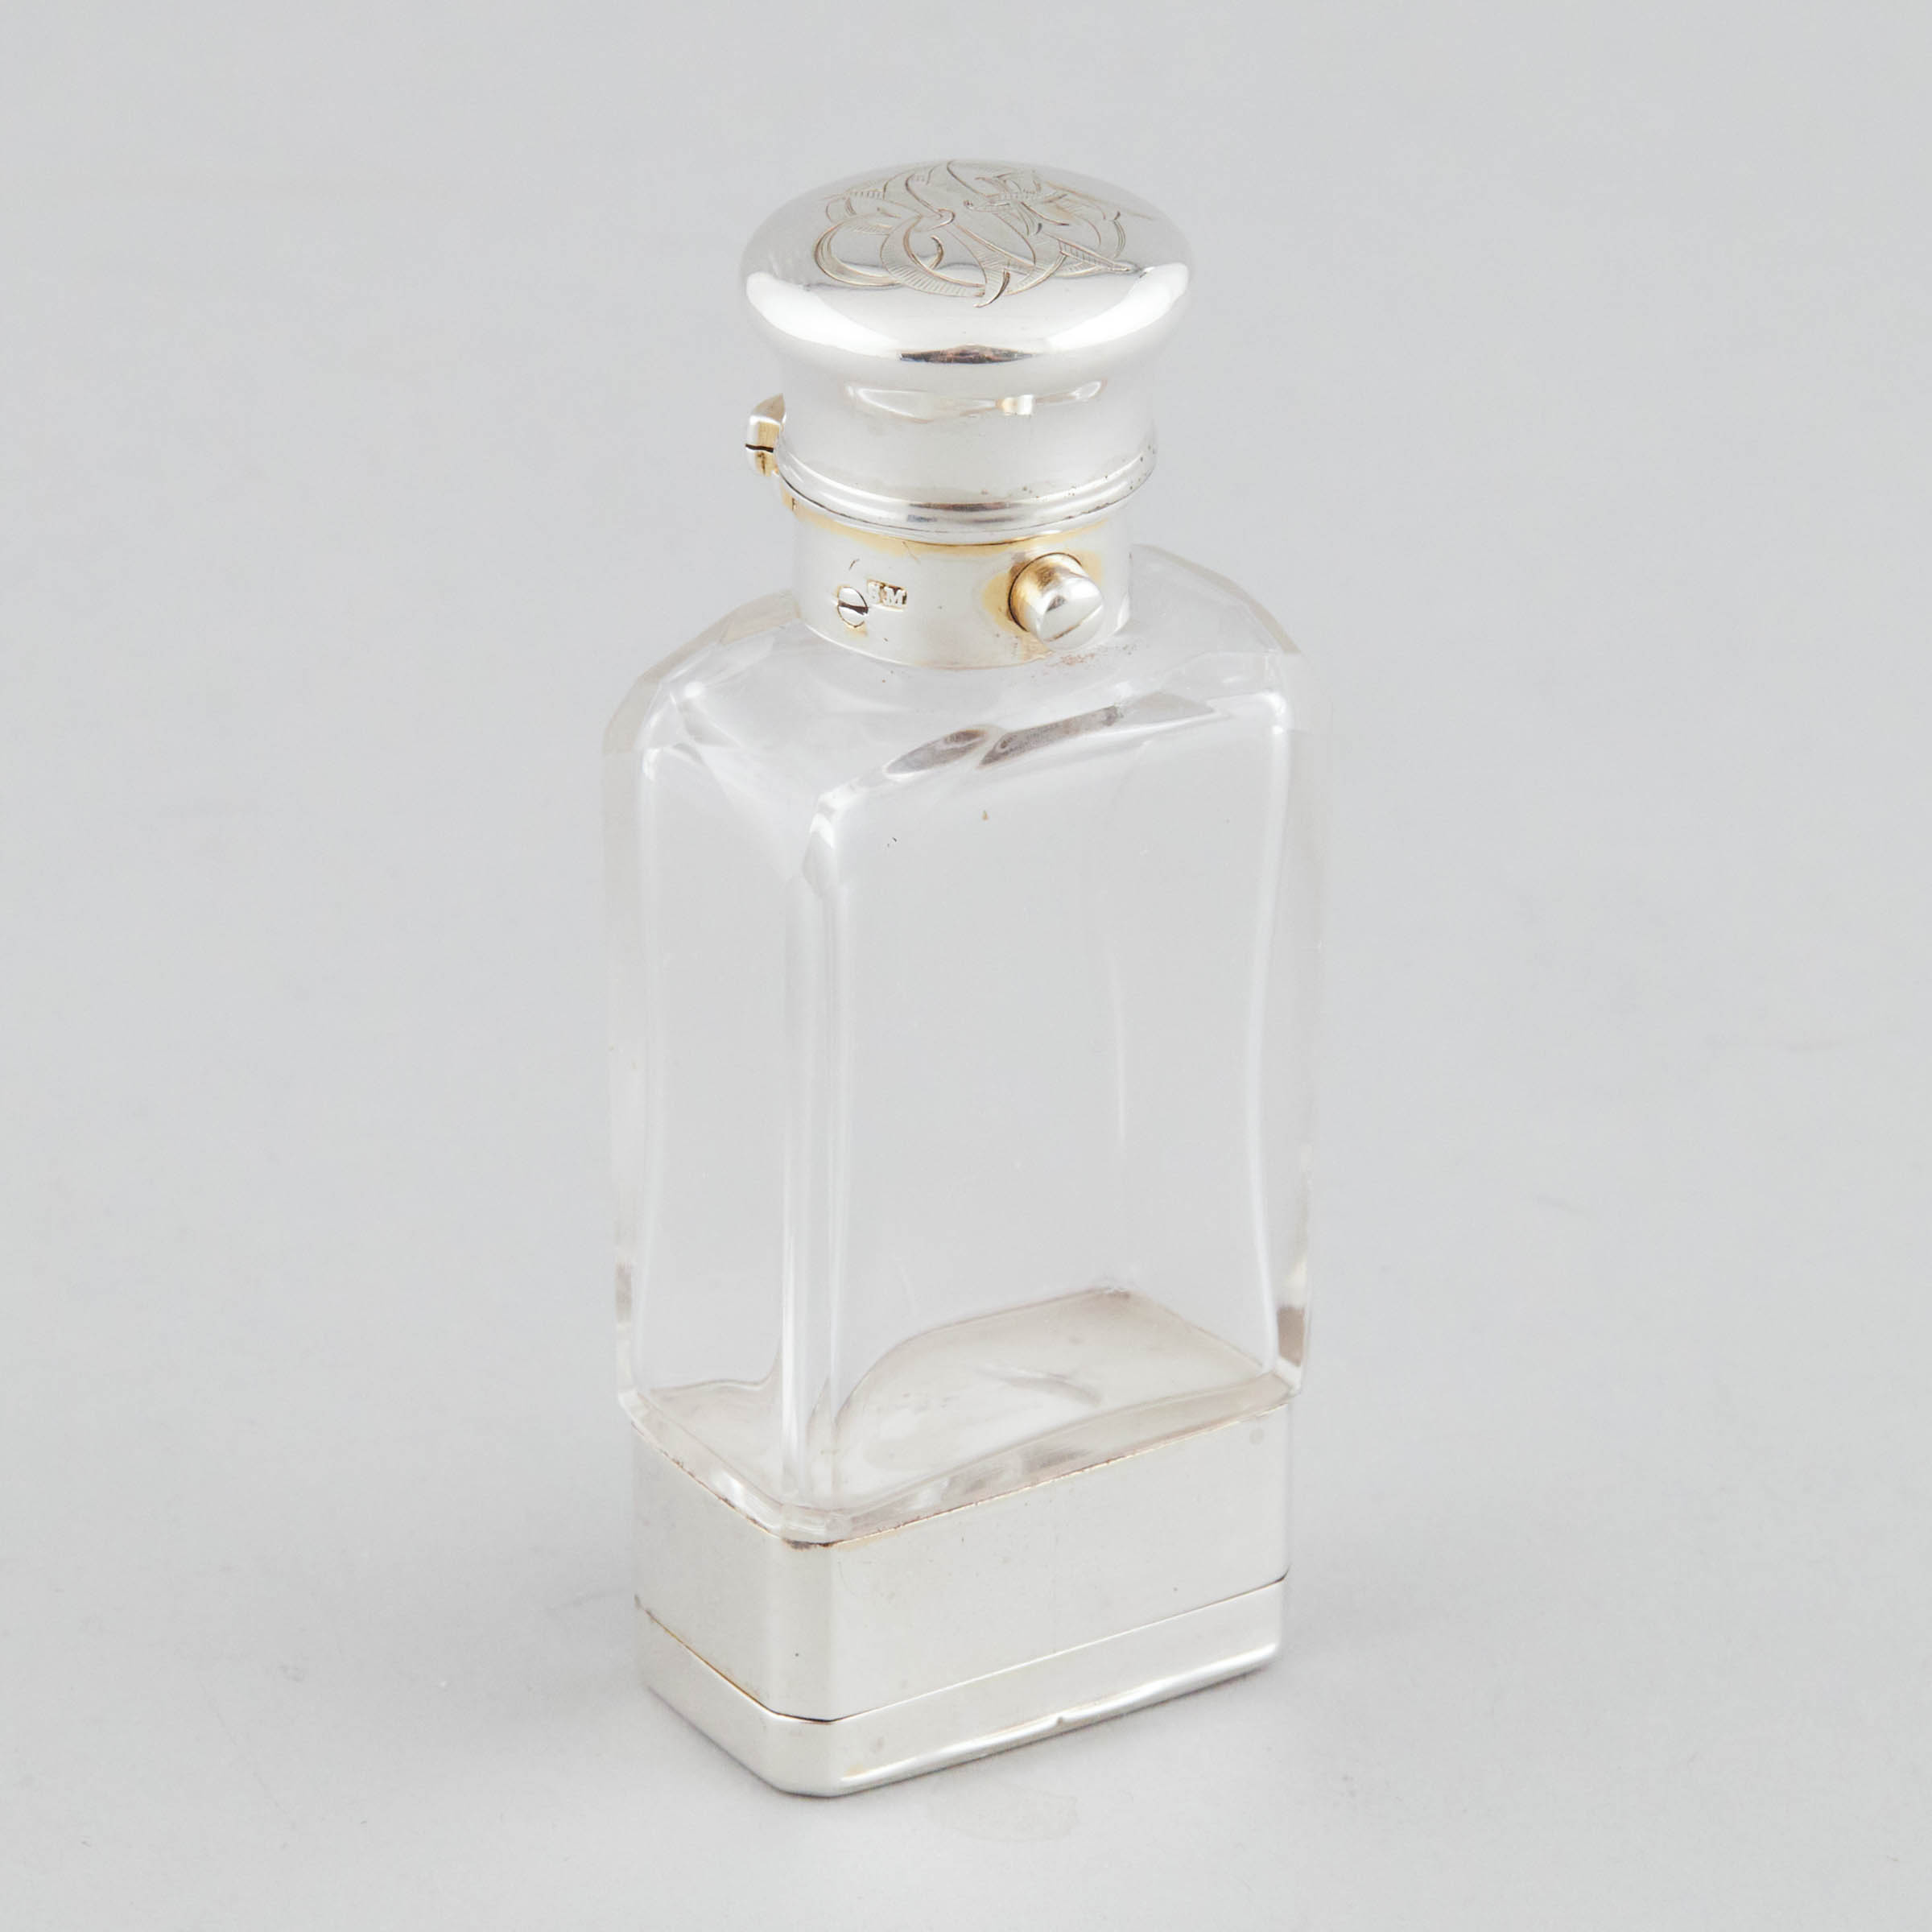 Victorian Silver Mounted Cut Glass Vinaigrette and Perfume Bottle, Sampson Mordan & Co., London, 1860